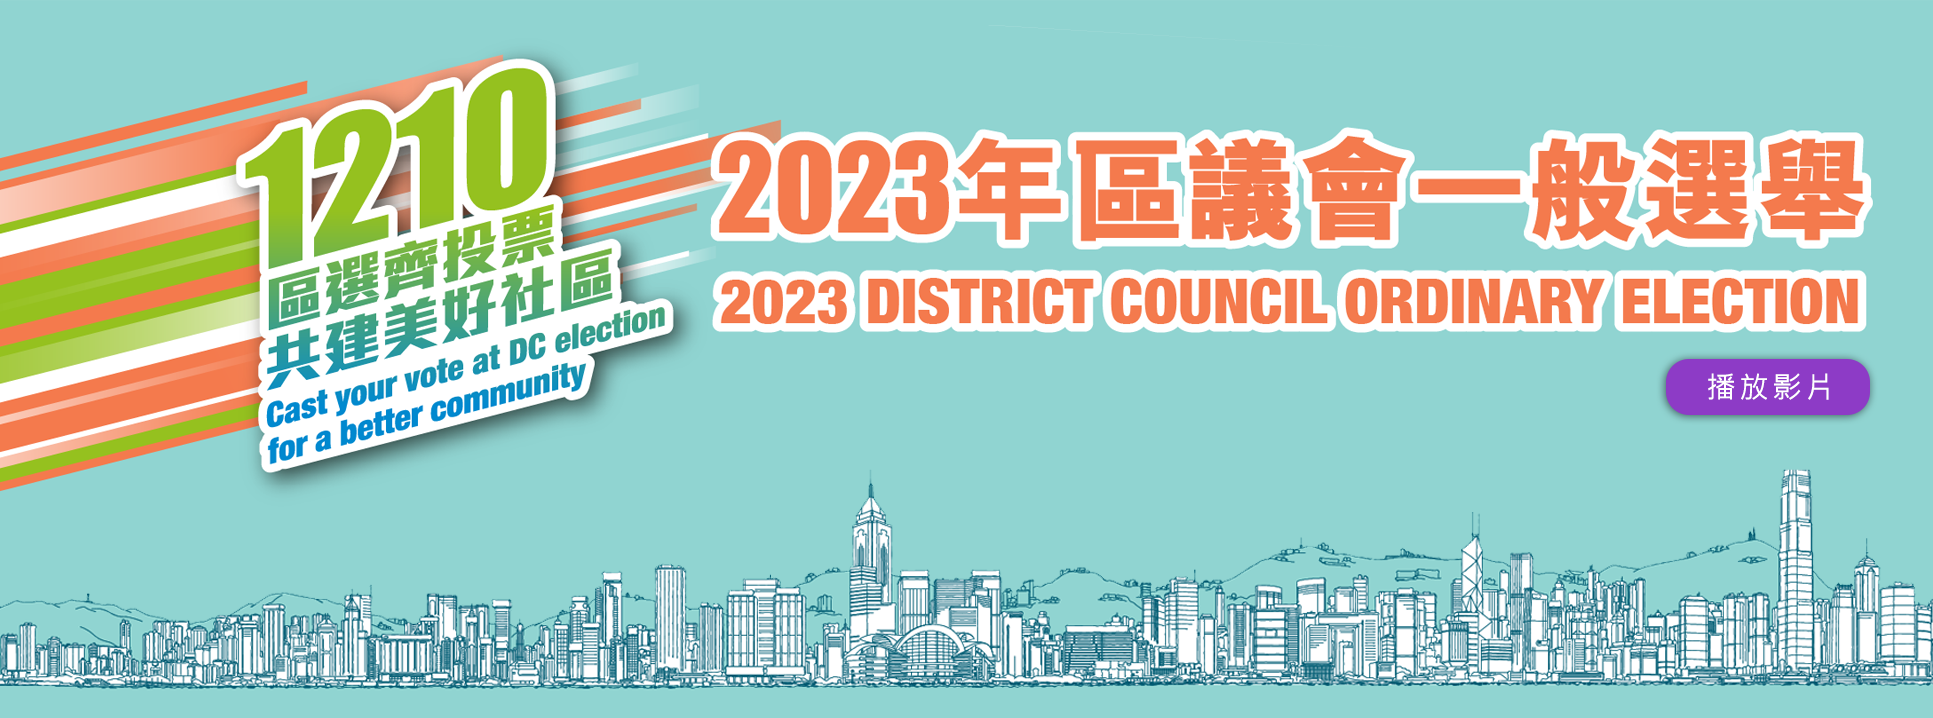 Promote 2023 District Council Ordinary Election-SC